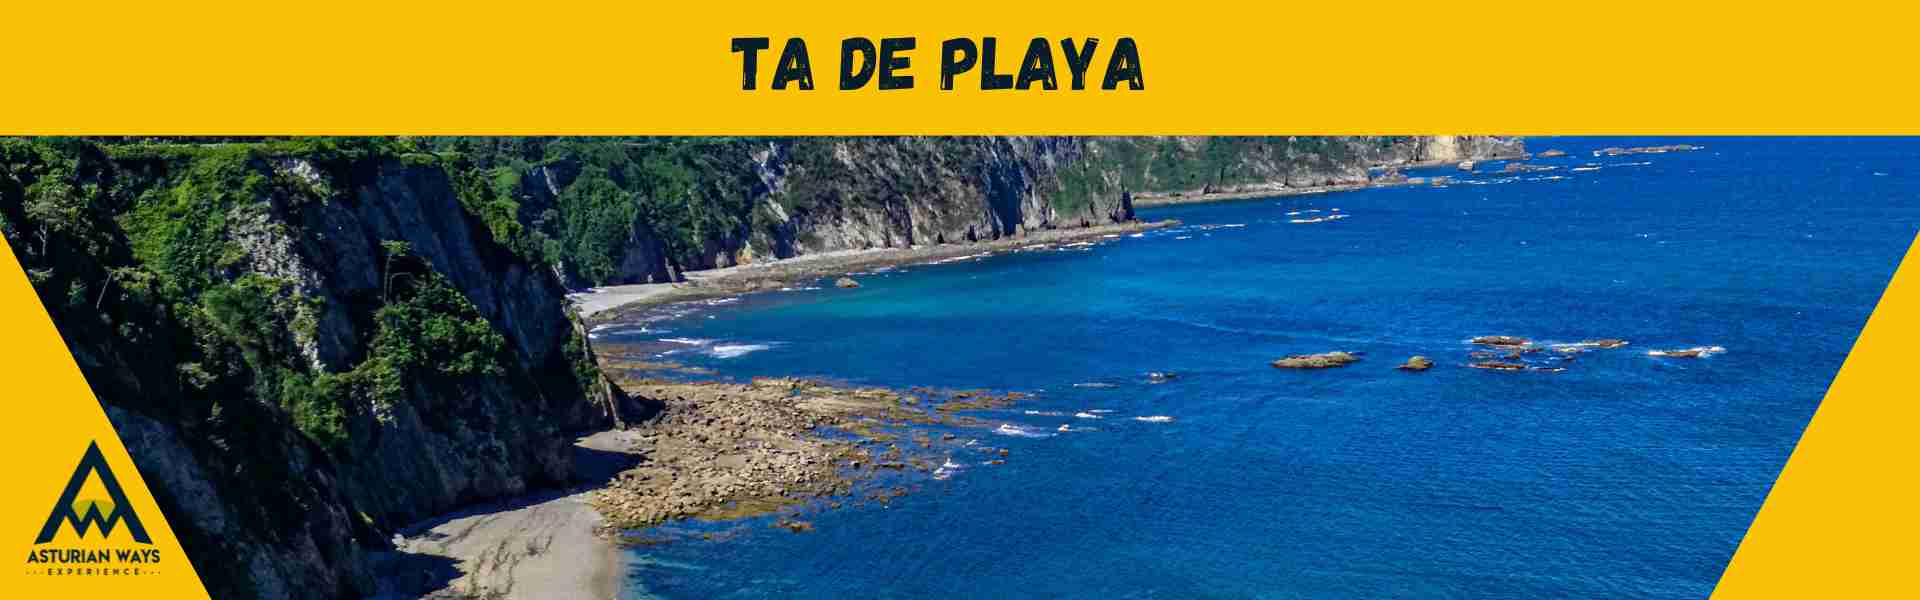 Rutas costeras de Asturias. Ta de Playa.